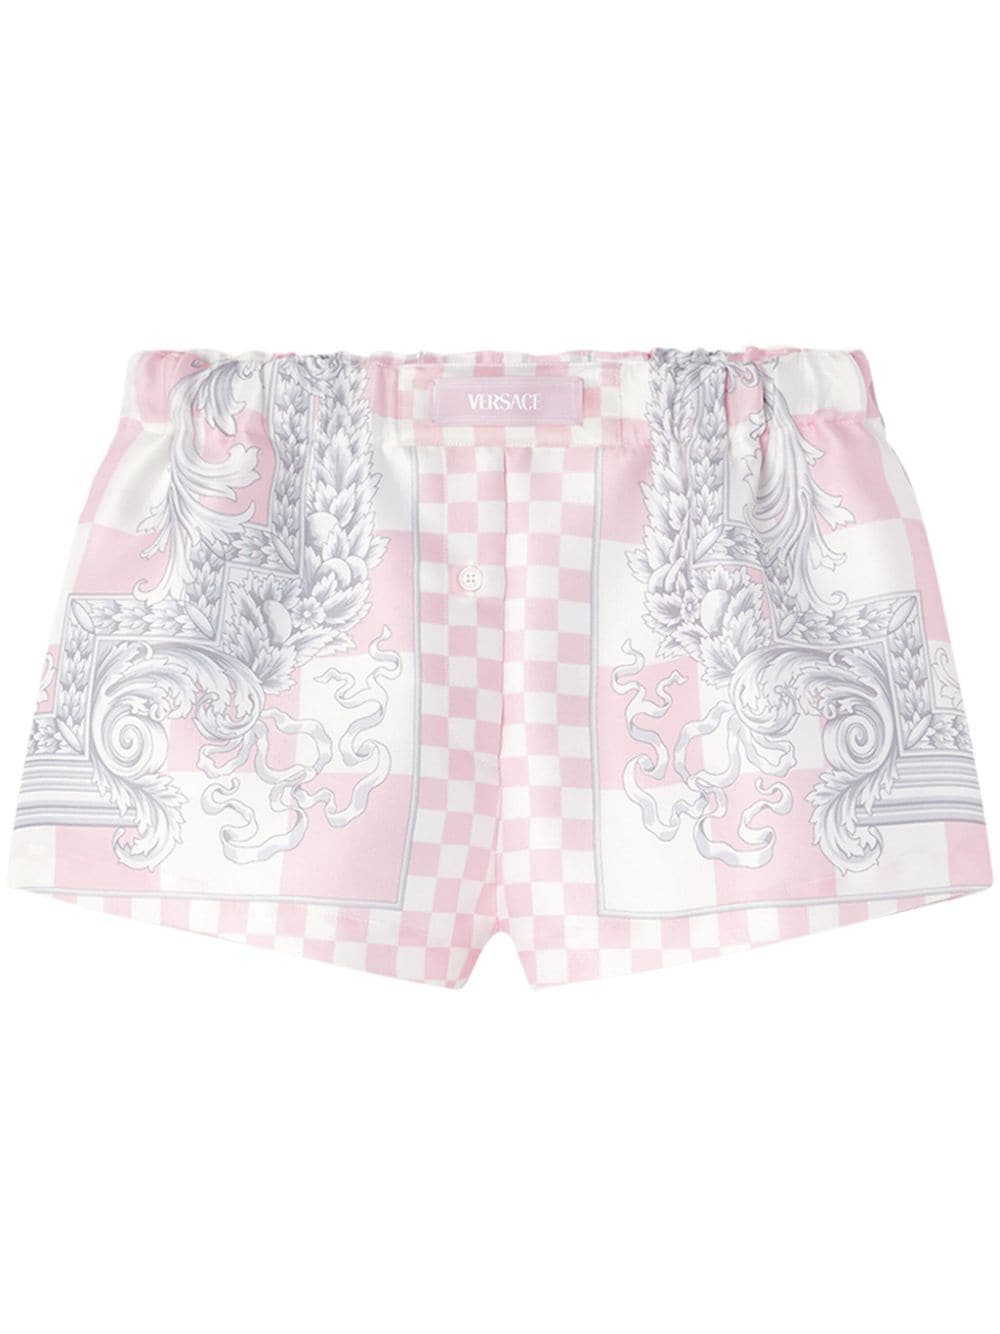 Pink/white/grey silk shorts